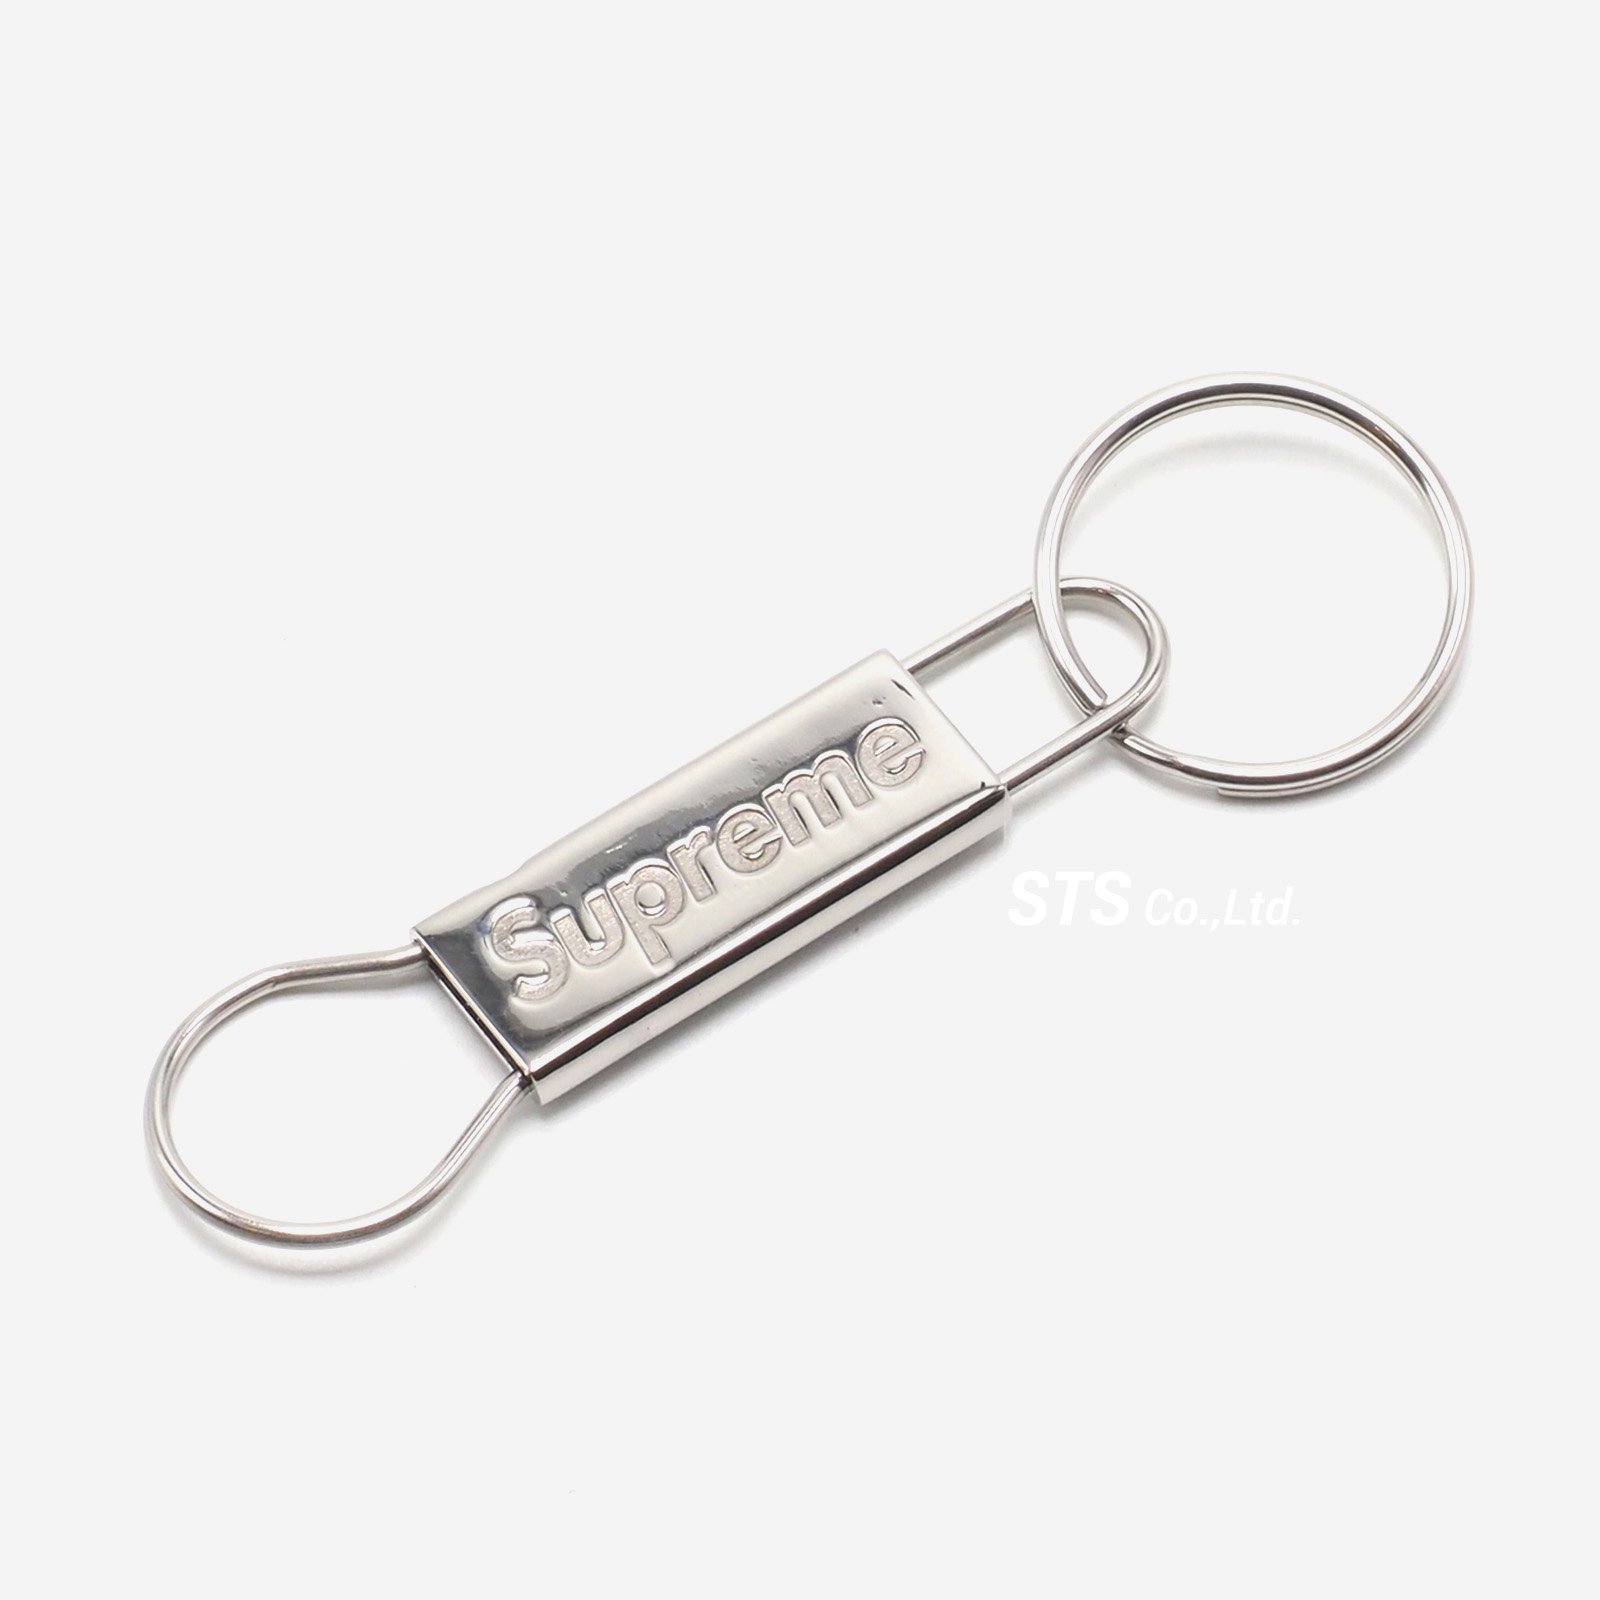 Supreme - Clip Keychain - ParkSIDER